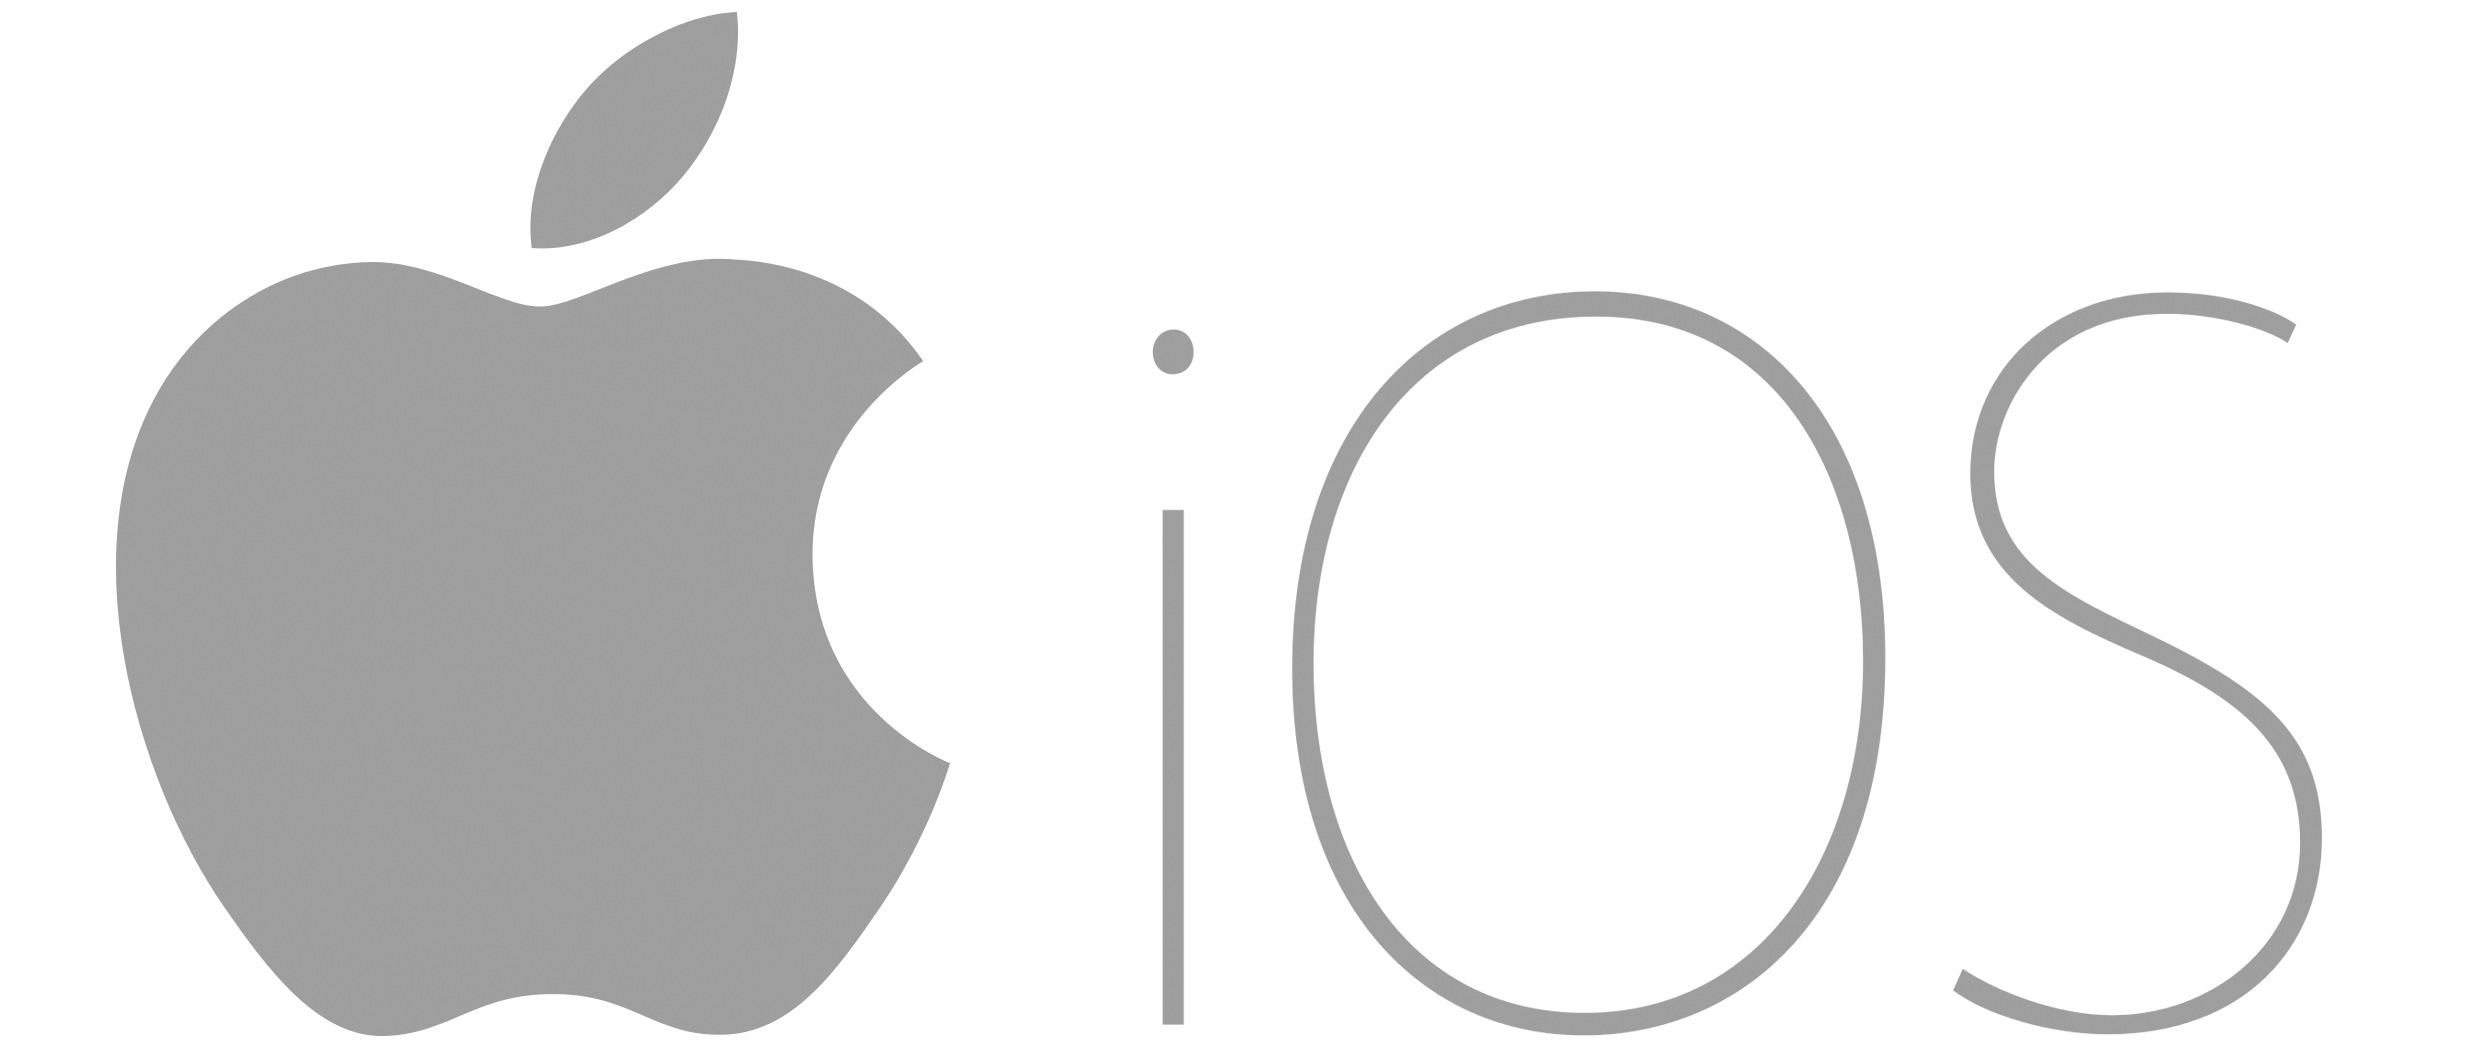 Apple iOS Logo - Apple Ios Logo Png Image